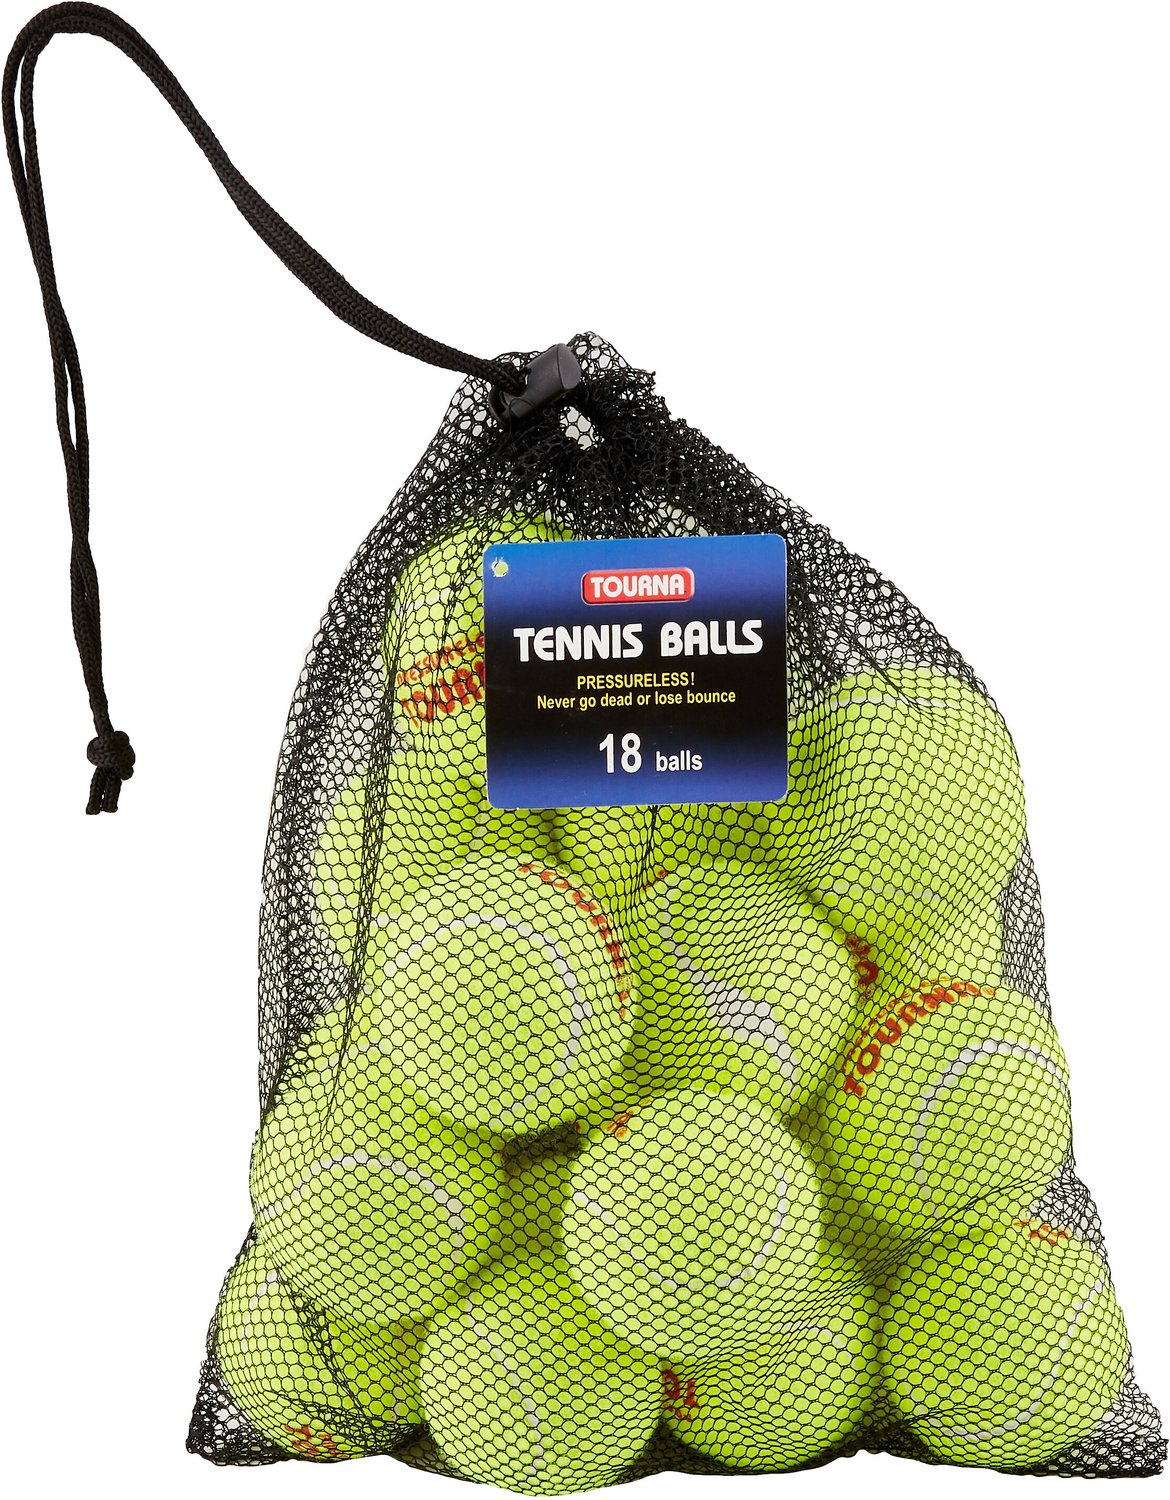 indestructible dog tennis ball